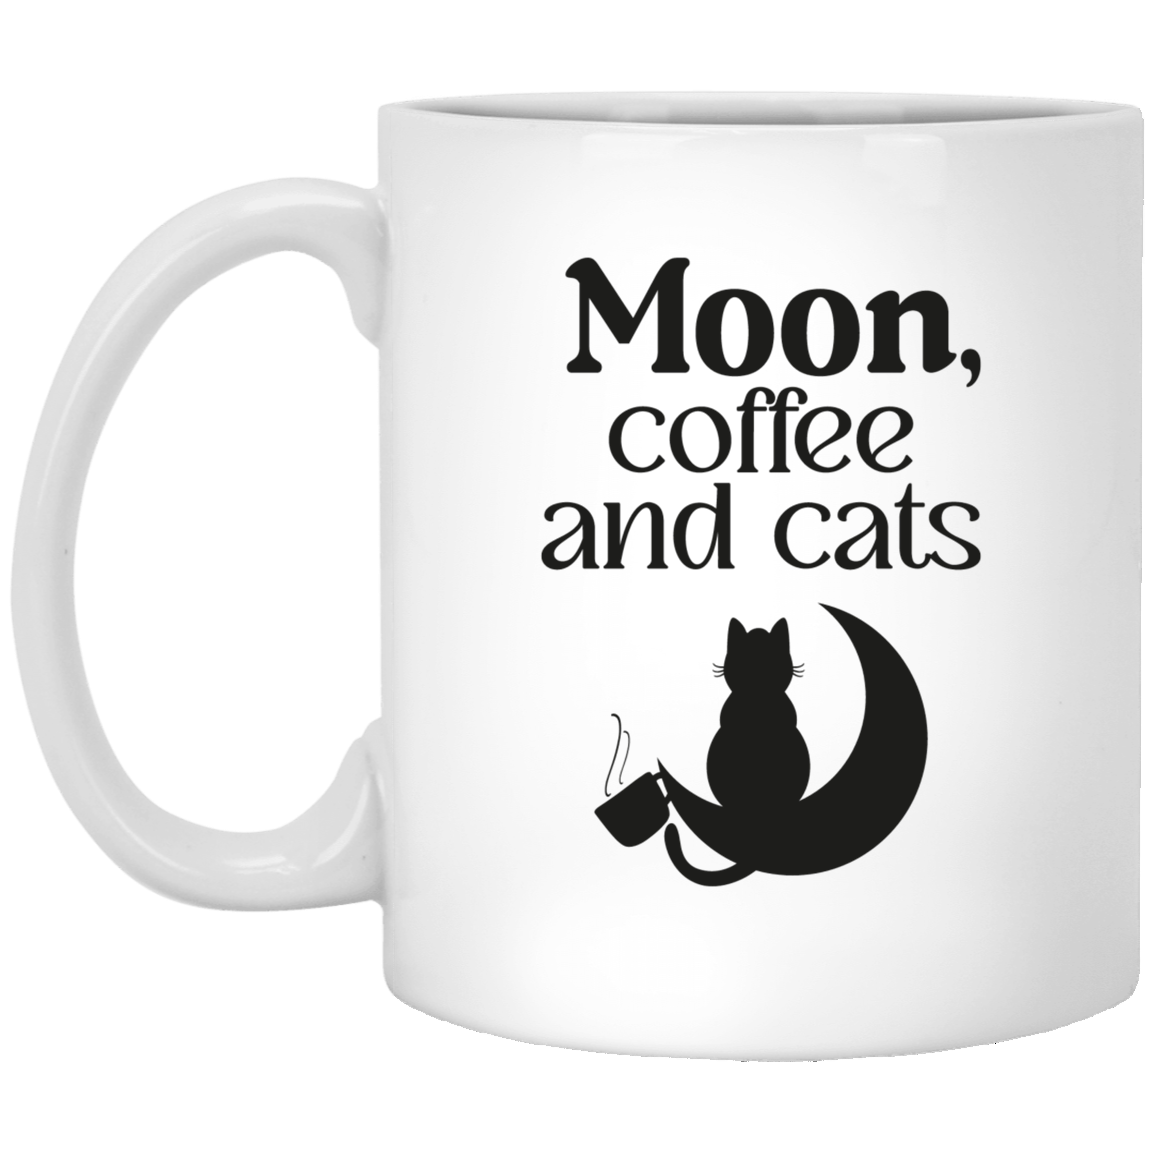 Moon, Coffee and cats 11 oz. White Mug